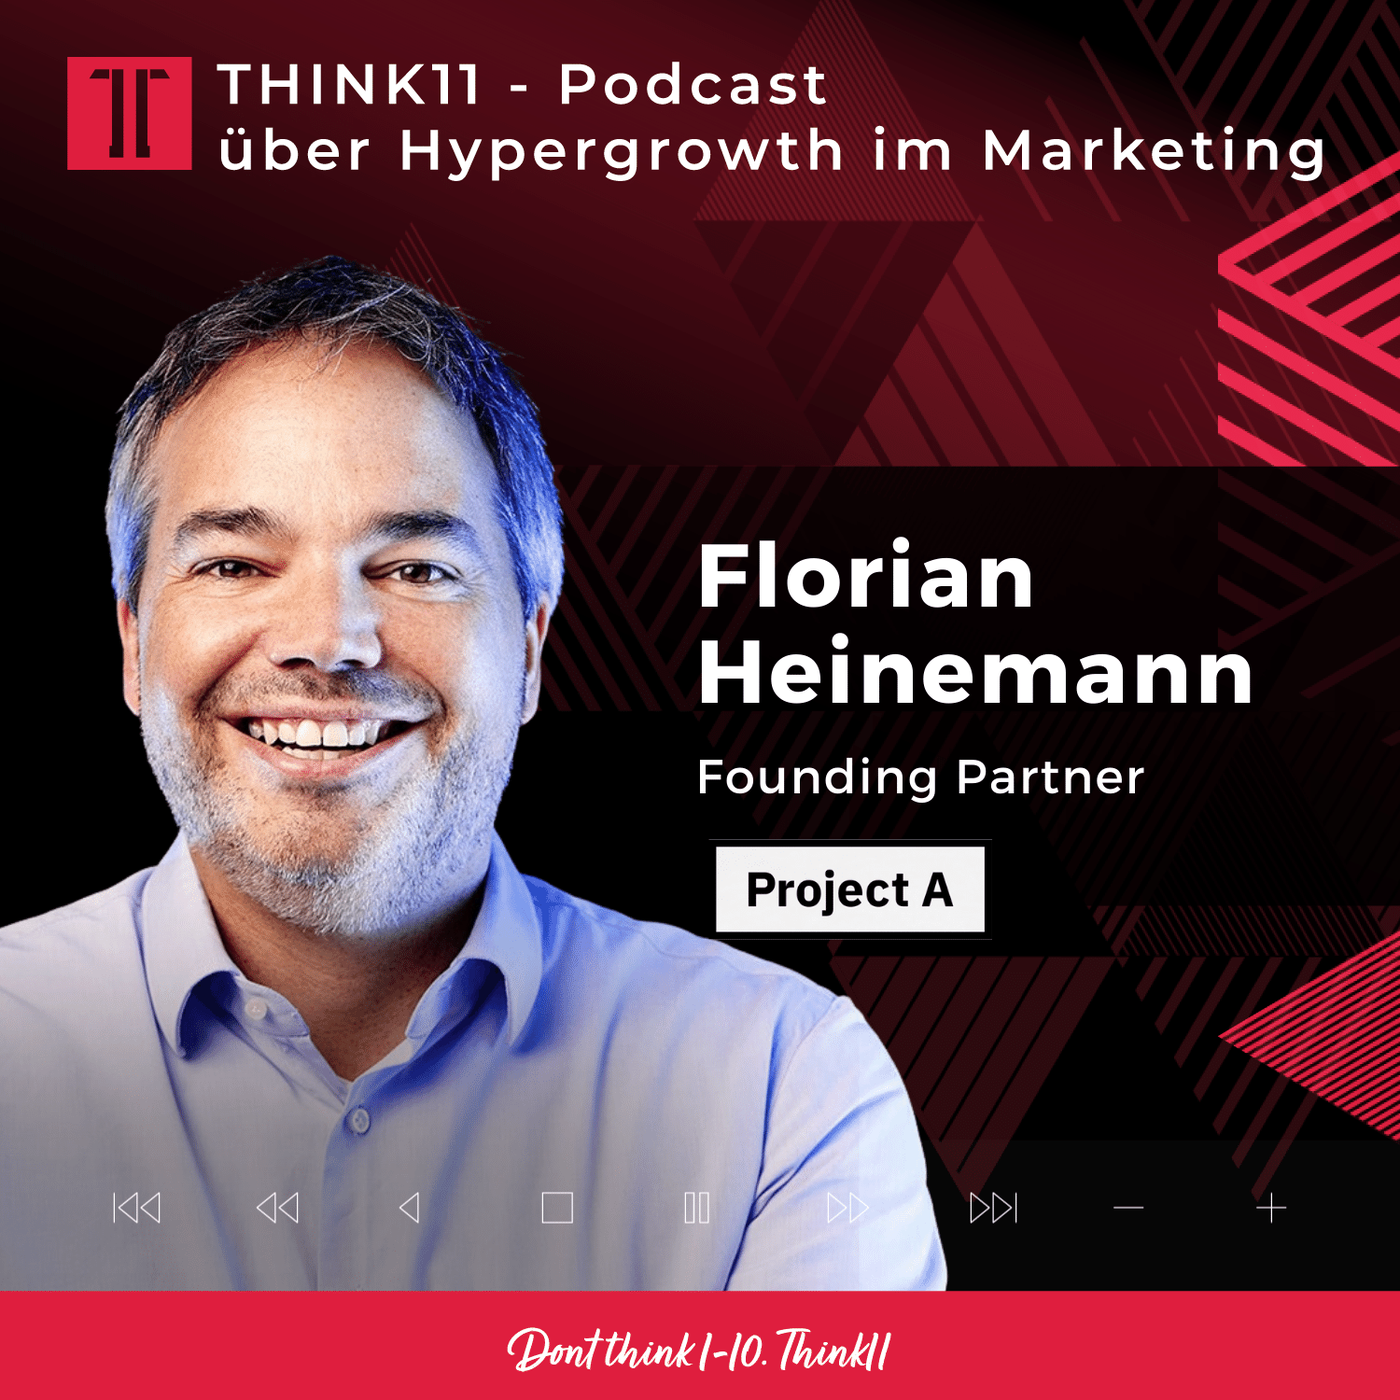 Think11-Talk mit Dr. Florian Heinemann, Founding Partner - Project A Ventures